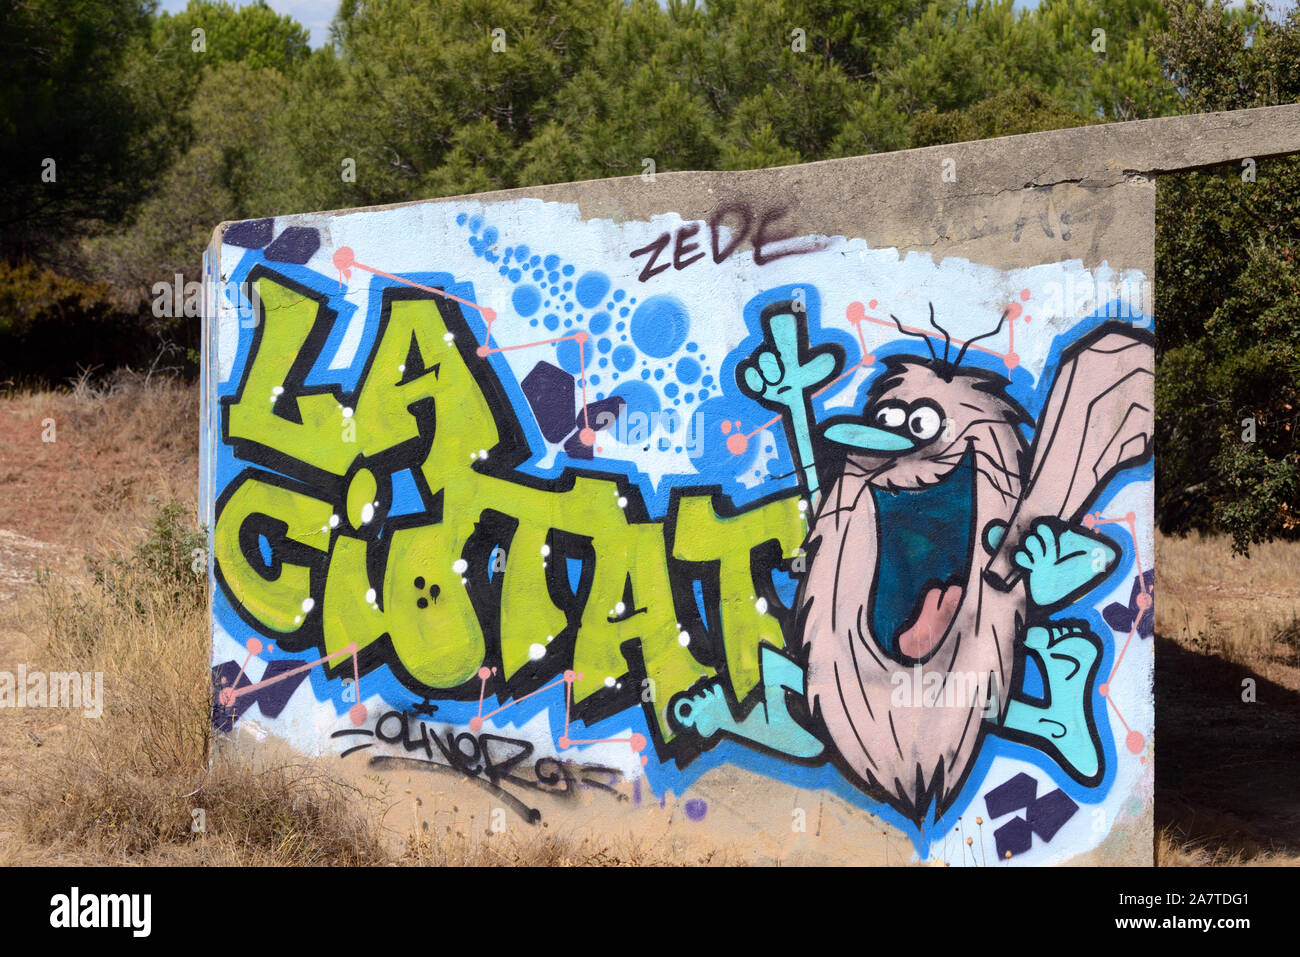 La Ciotat gemalte Graffiti Schild am Eingang von La Ciotat Bouches-du-Rhone Provence Frankreich Stockfoto